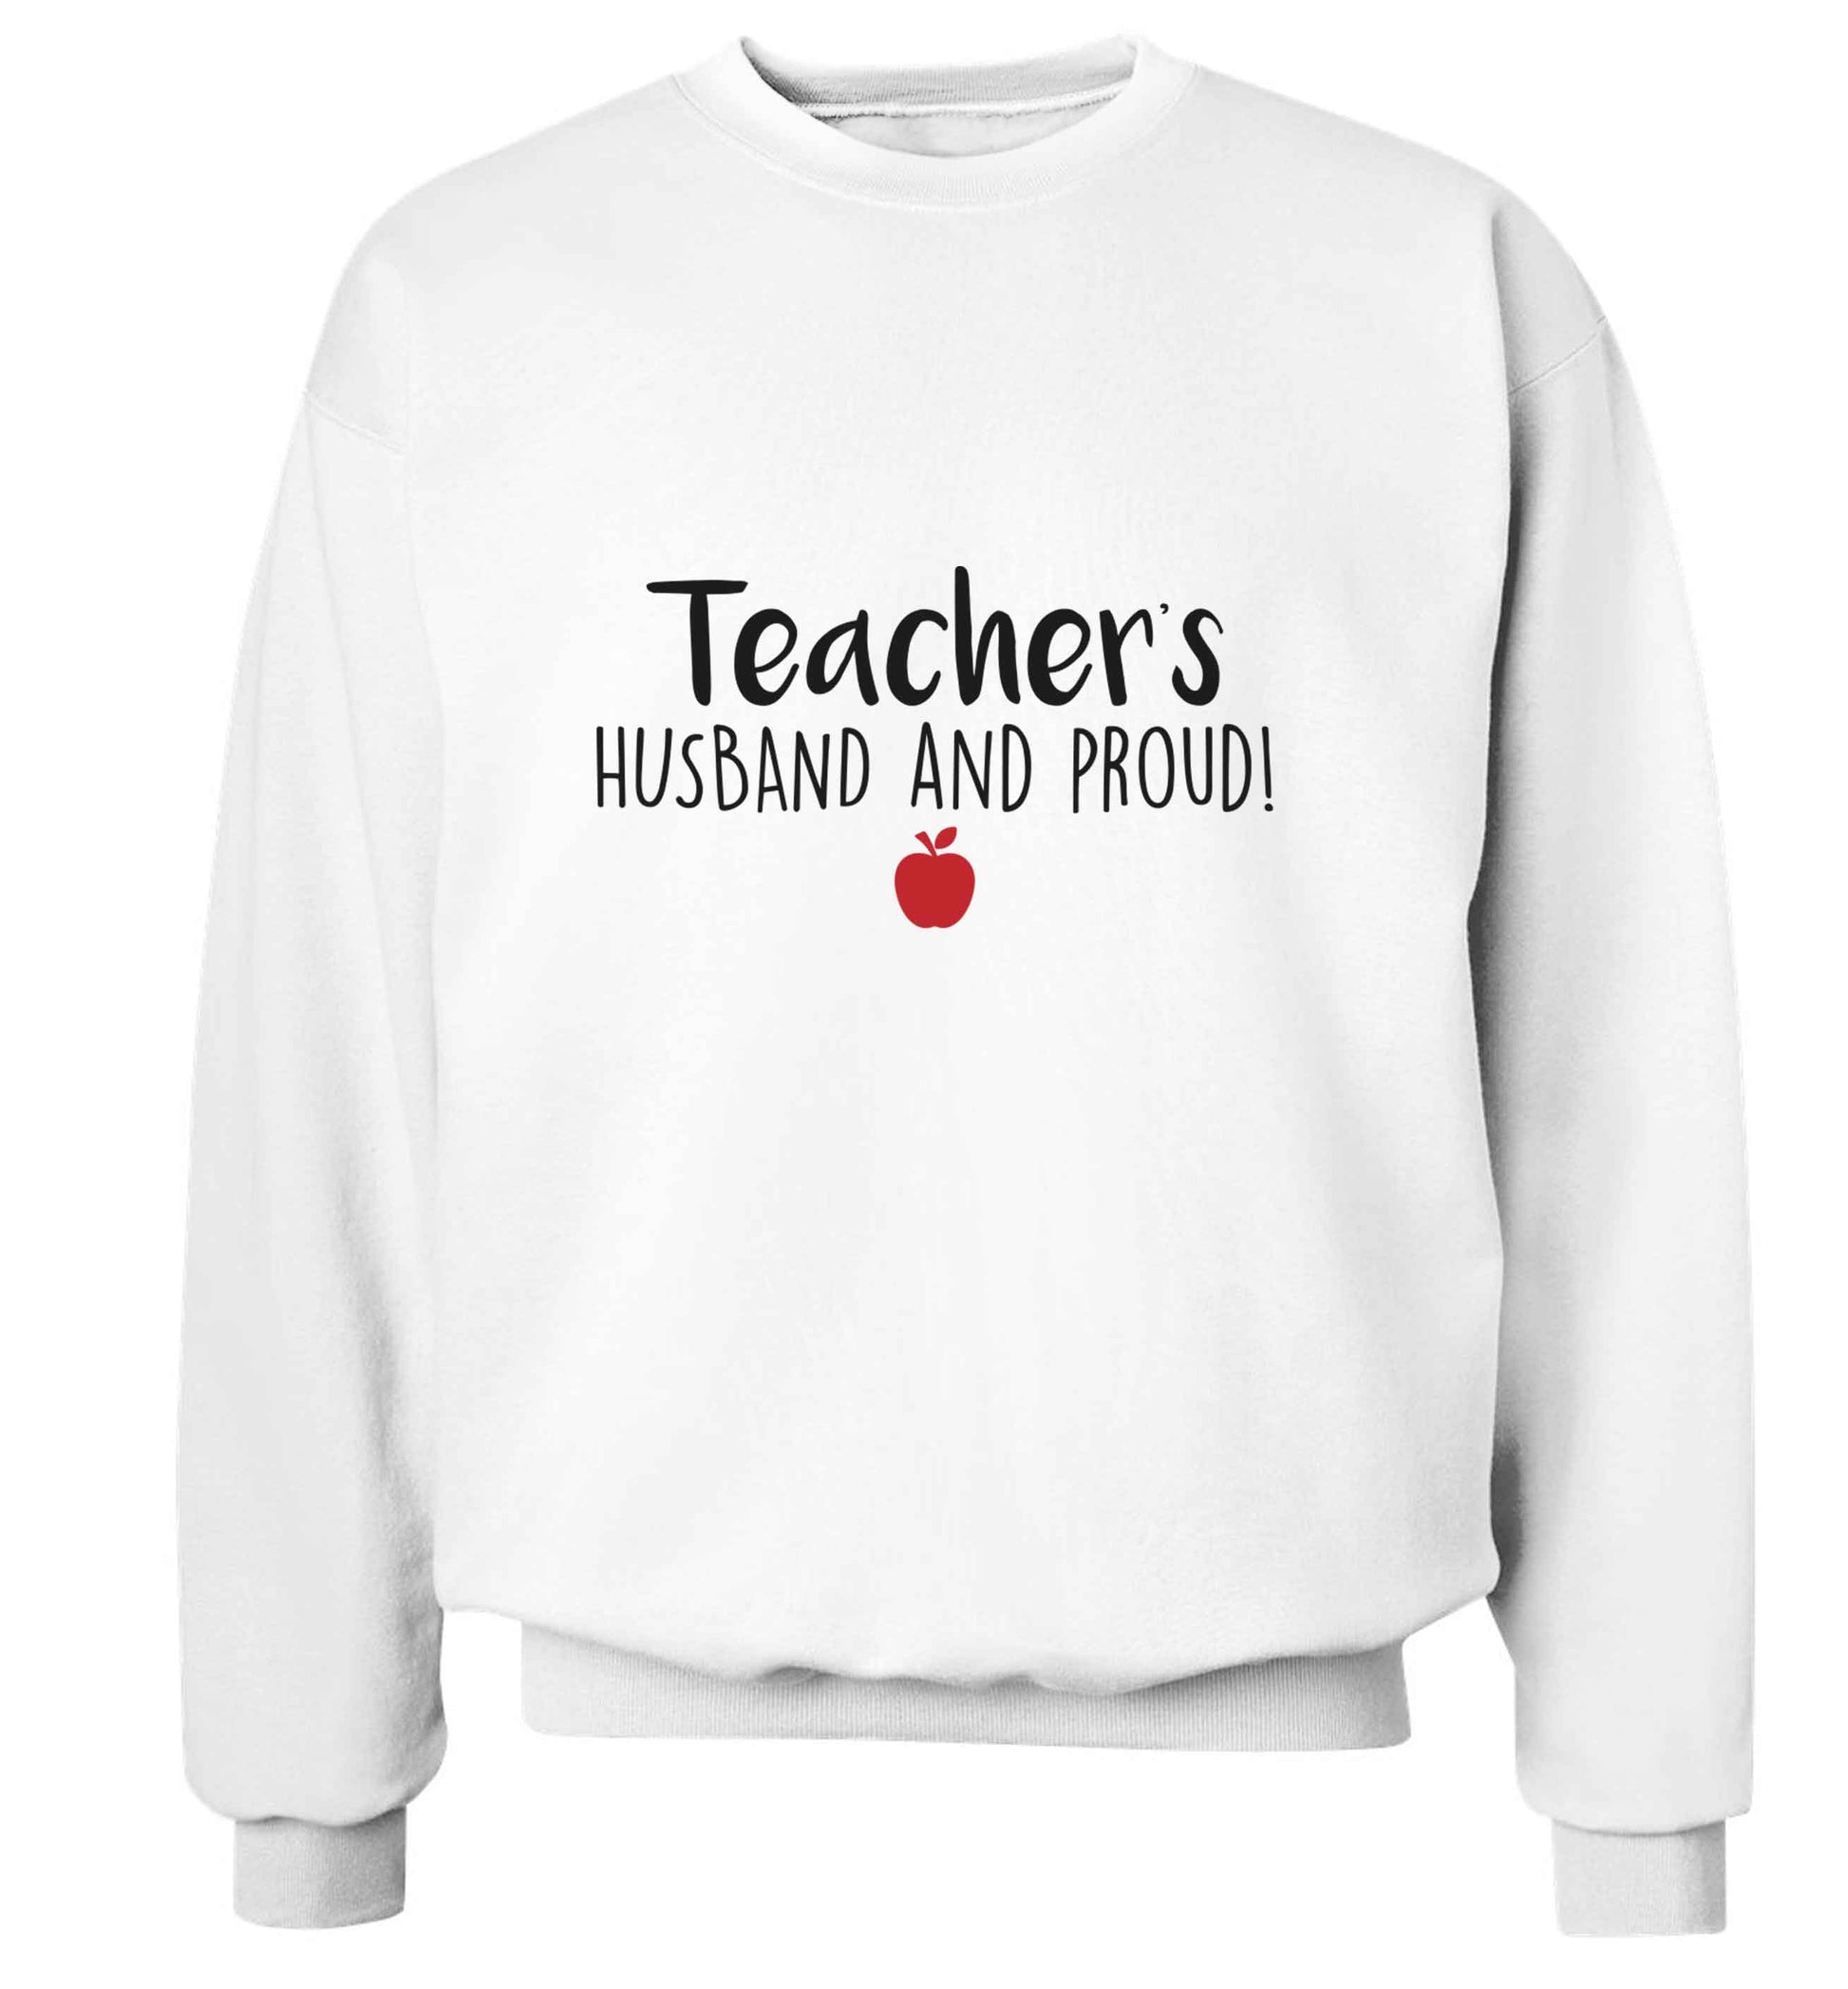 Teachers husband and proud adult's unisex white sweater 2XL